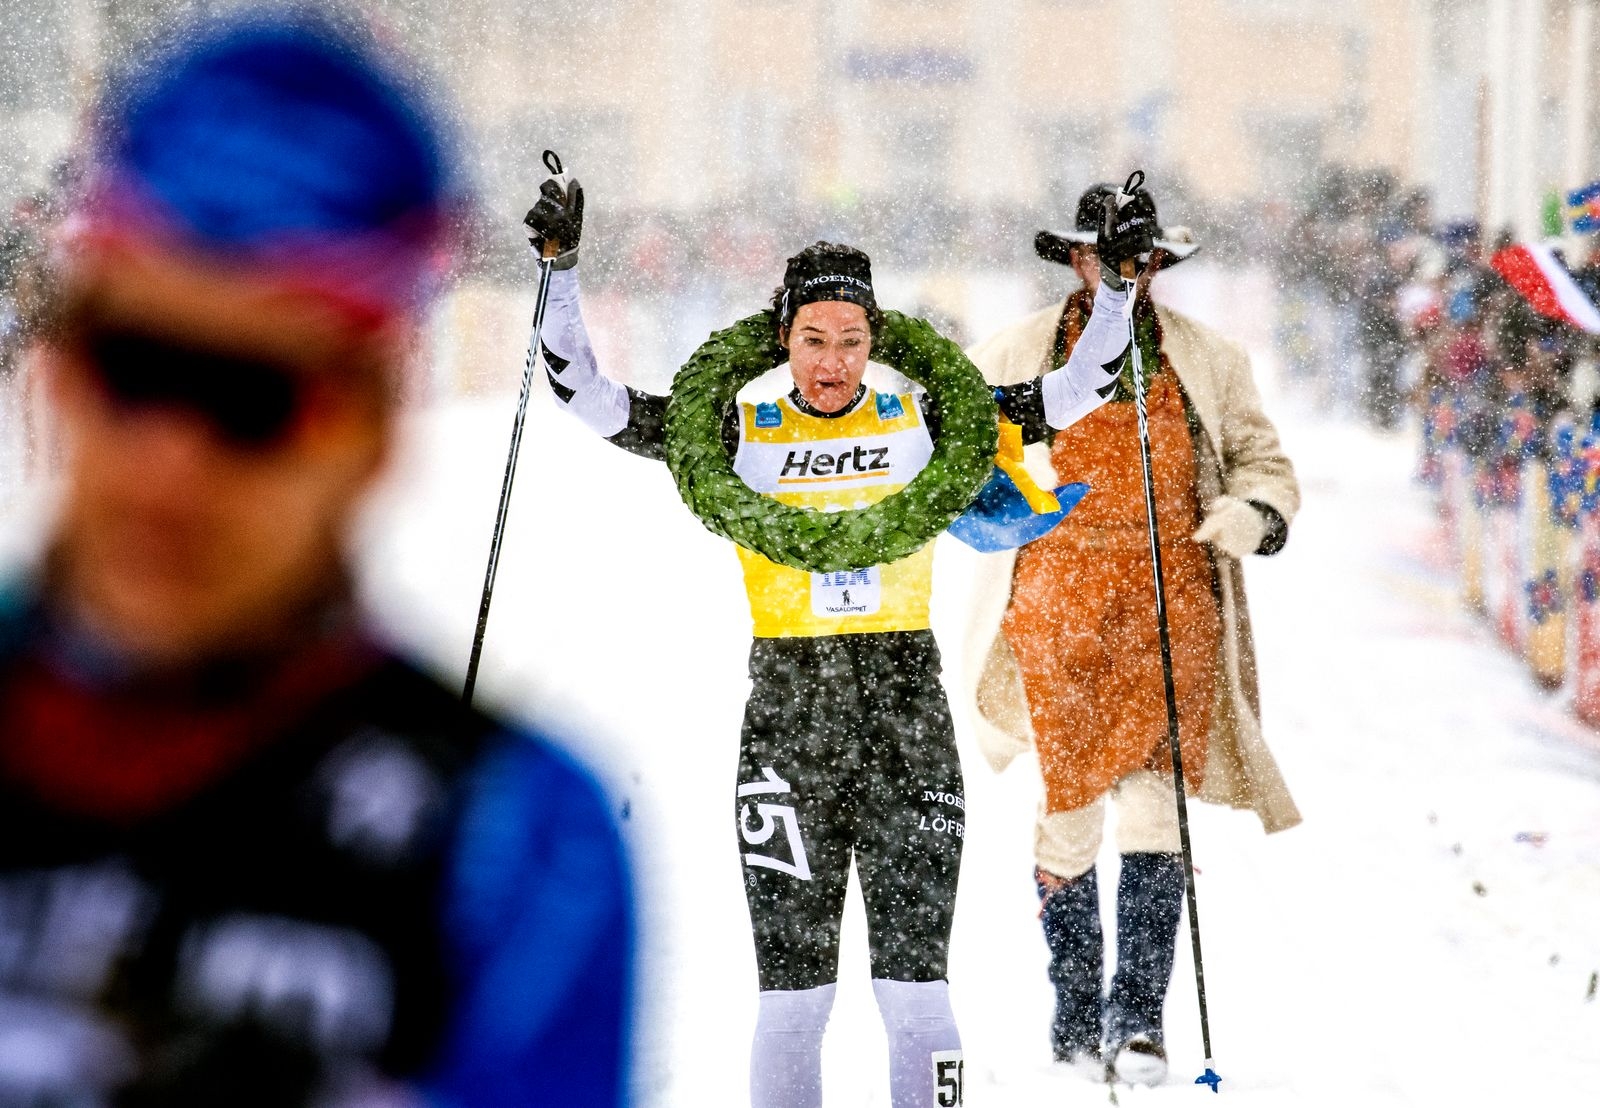 MORA 2019-03-03
Britta Johansson Norgren vinner damklassen i Vasaloppet 2019. 
Foto Ulf Palm / TT / Kod 9110